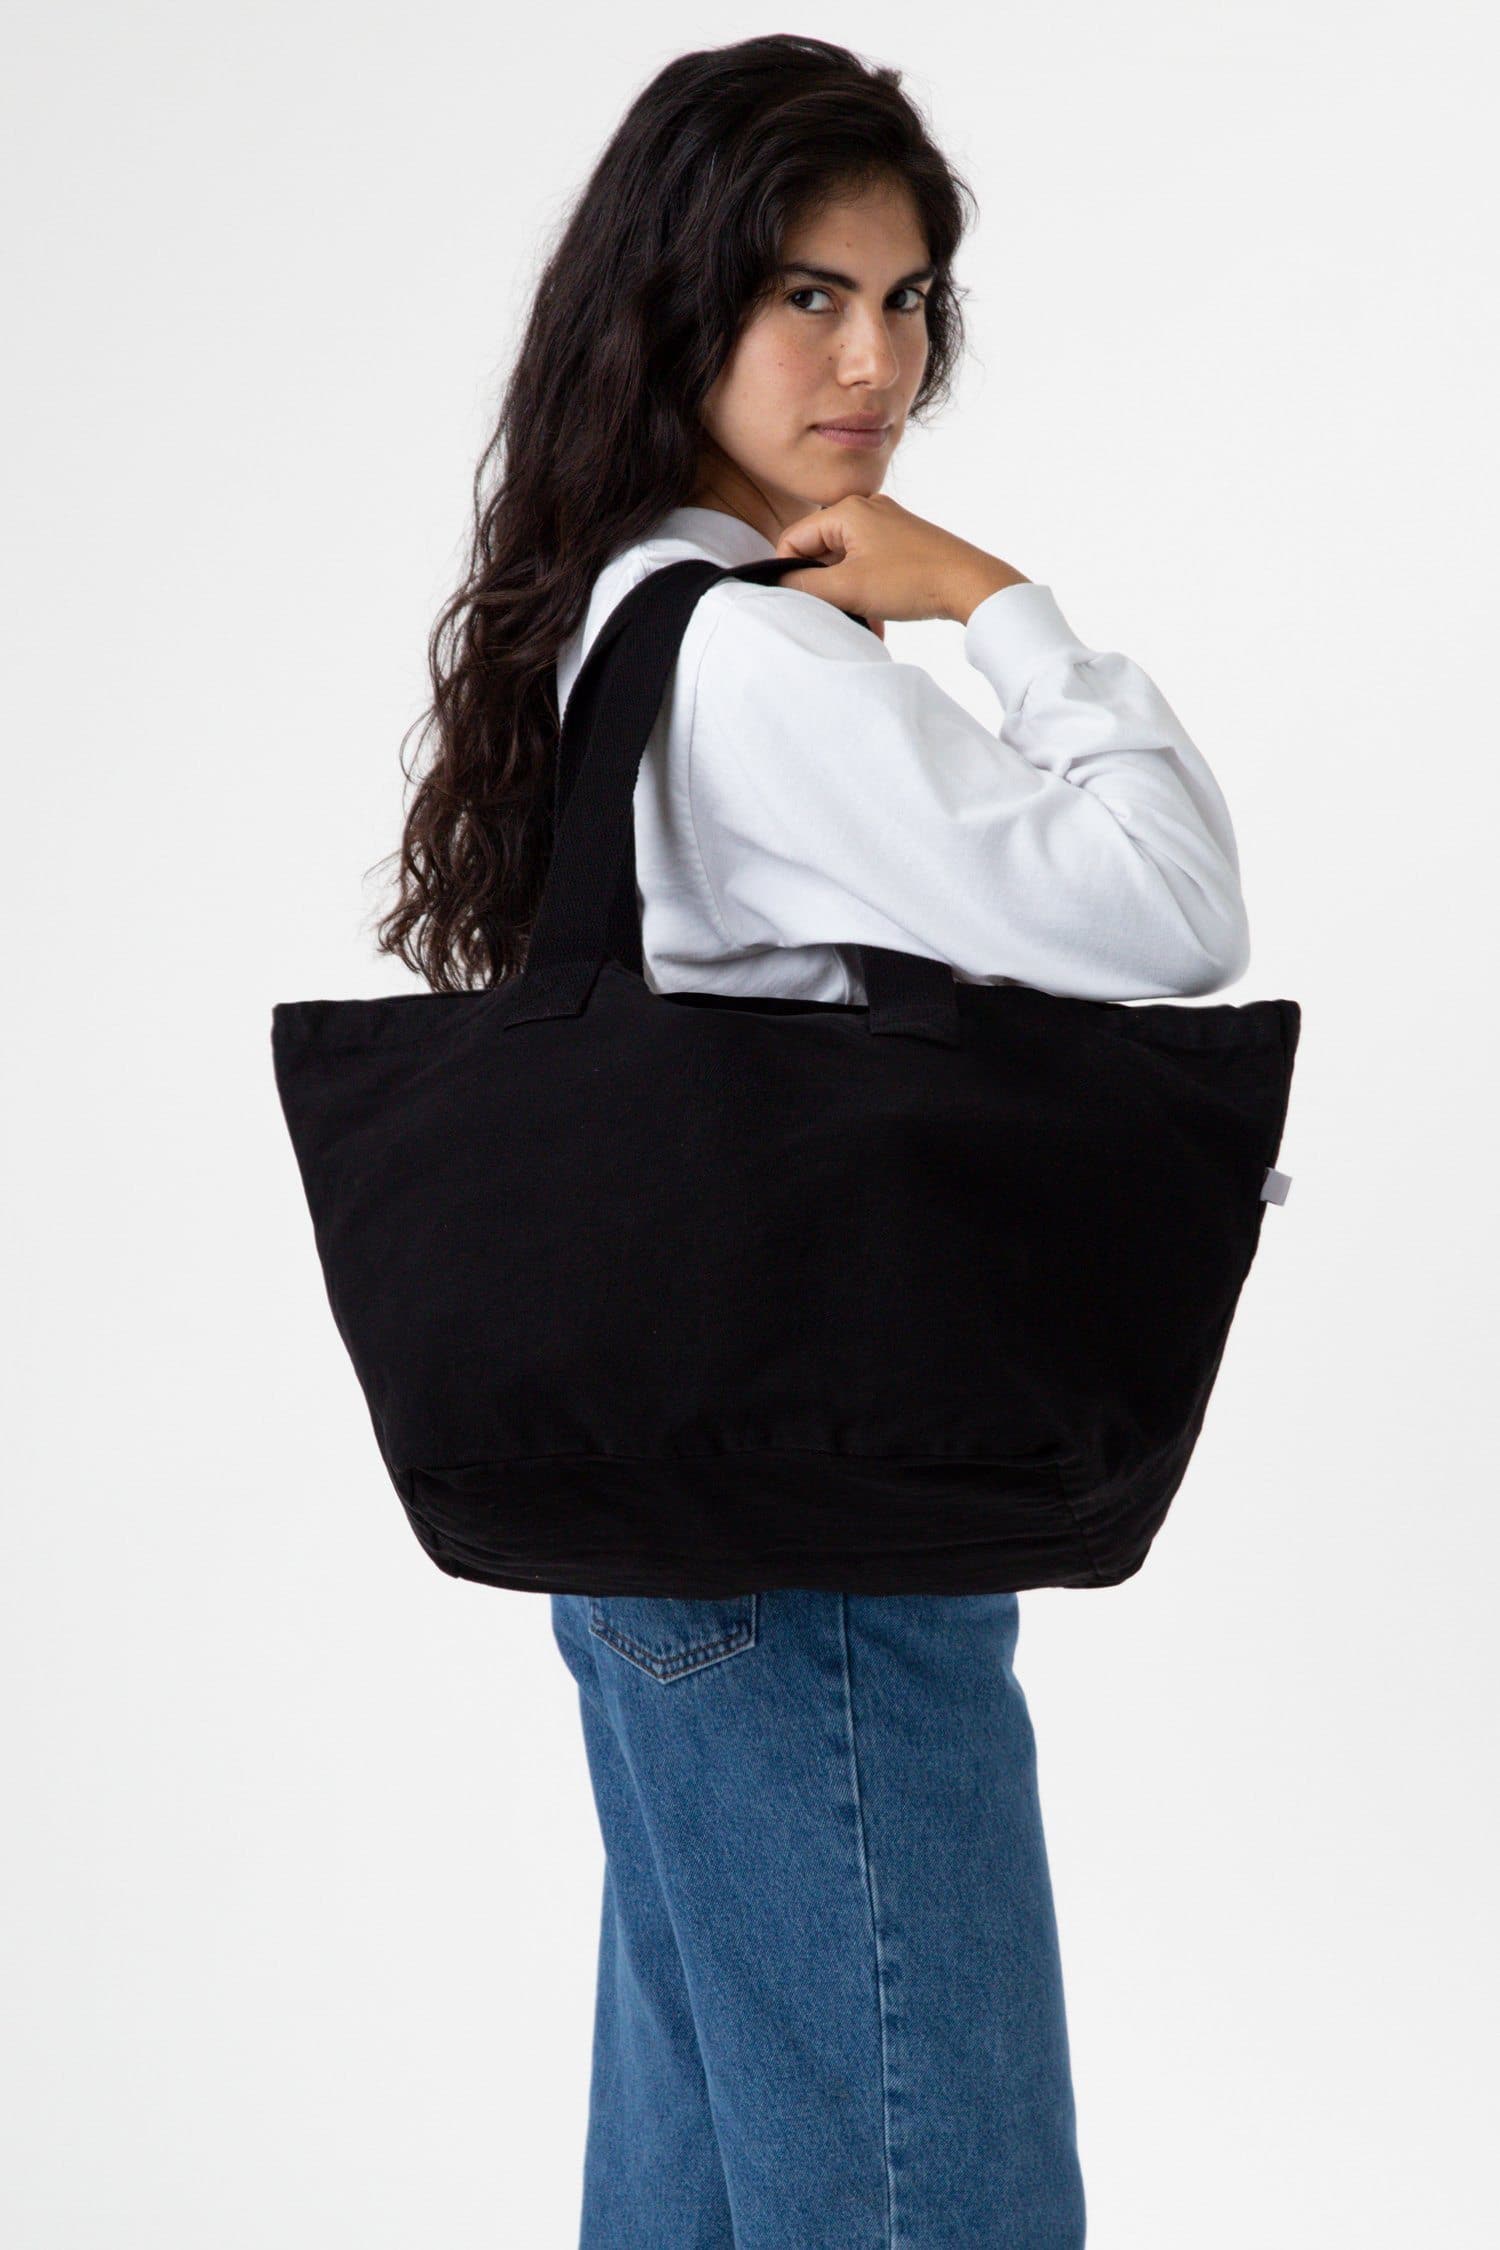 Korean Style Women Tote Bag Single Shoulder Zipper Pouch Large